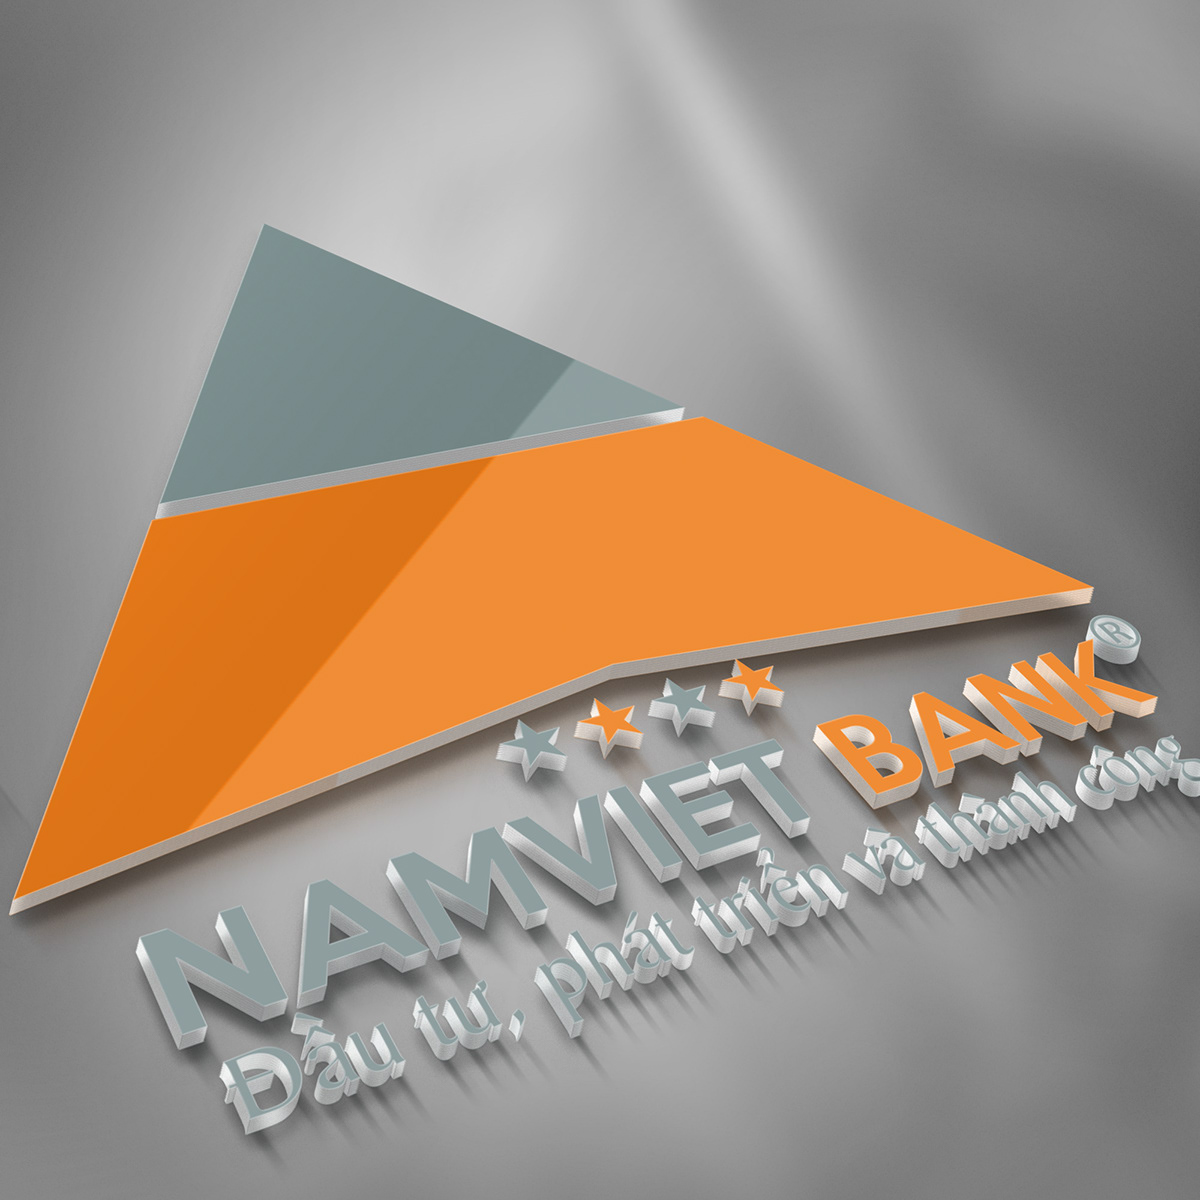 NAMVIET BANK.